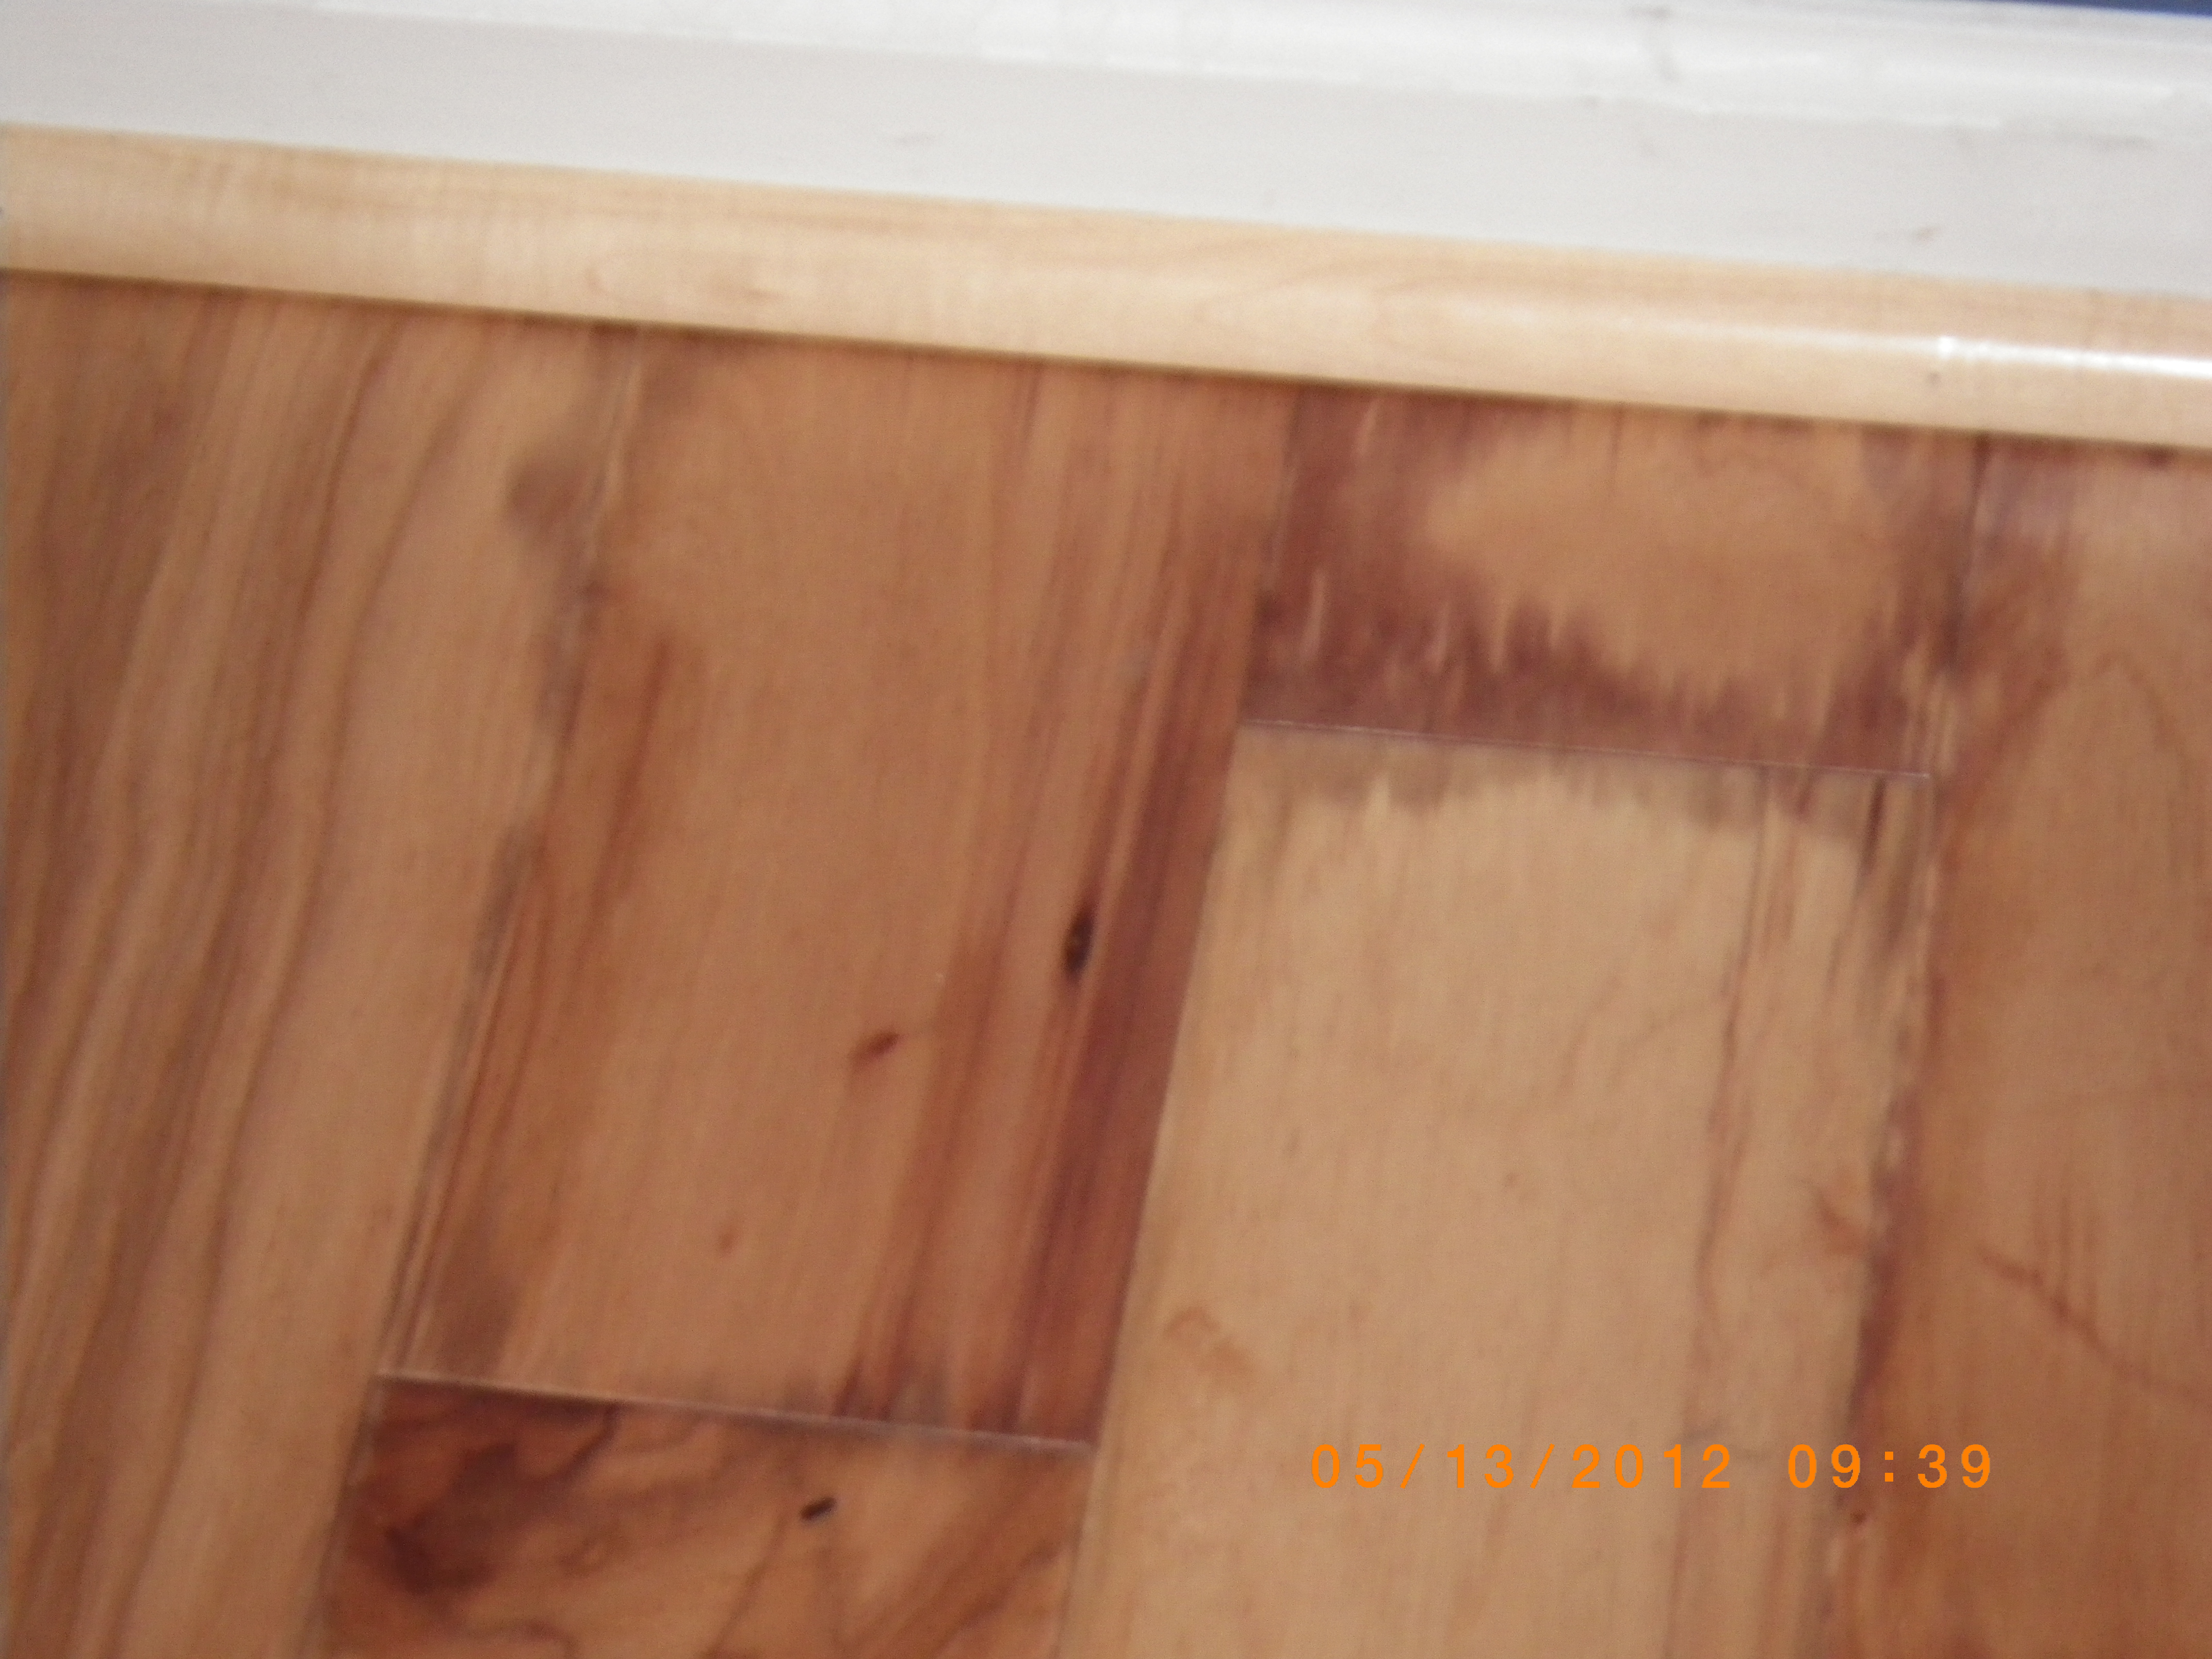 Hardwood Floors, Can You Use Water On Hardwood Floors